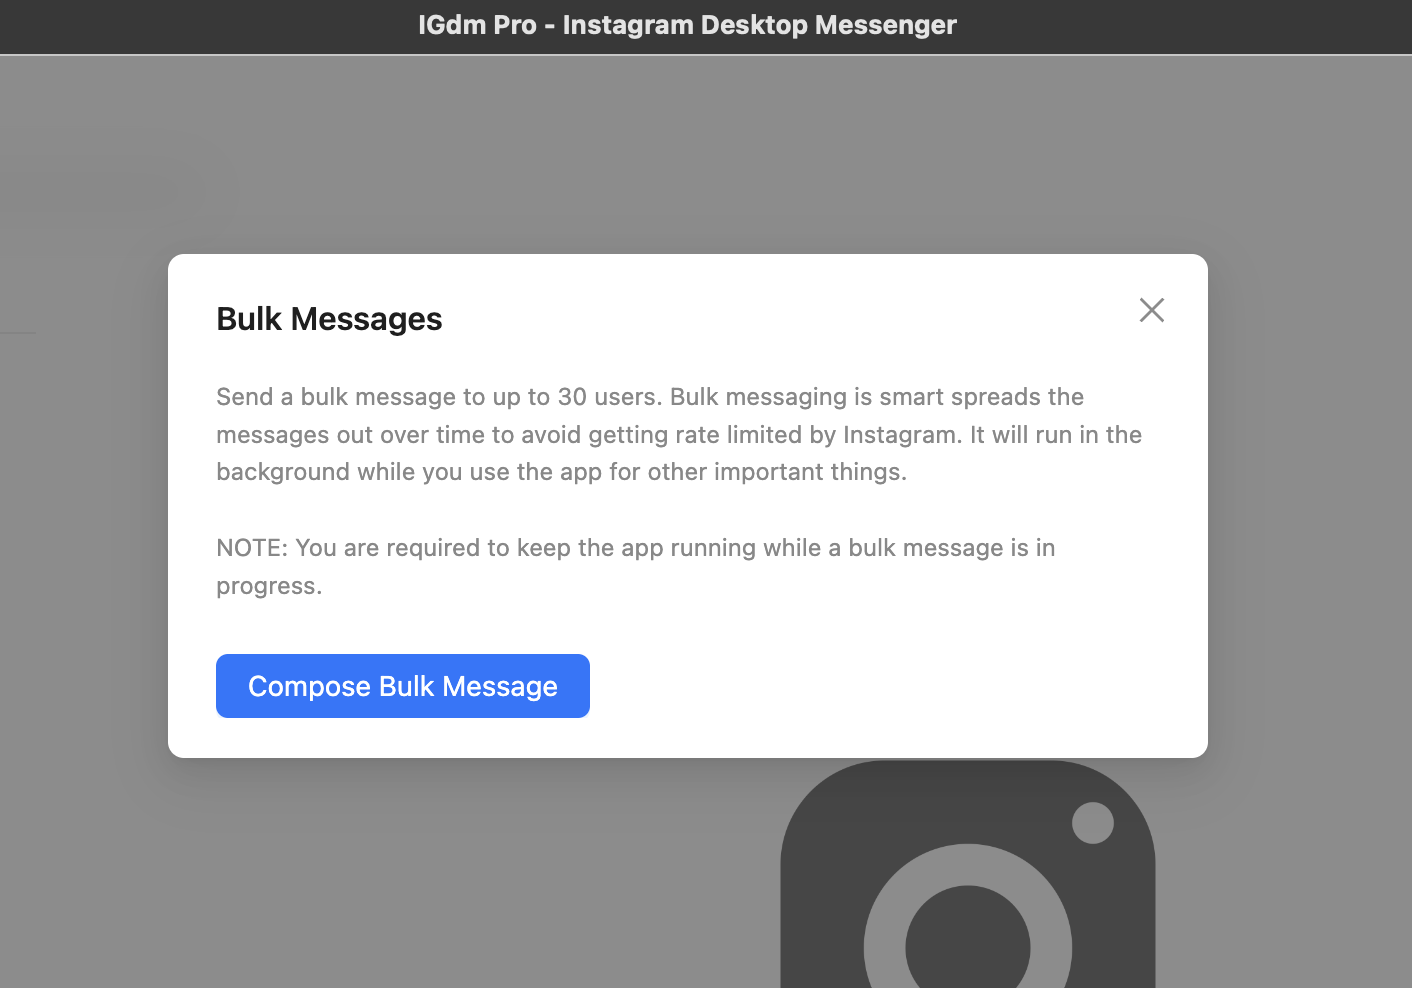 IGdm Pro Bulk Message Pop-Up